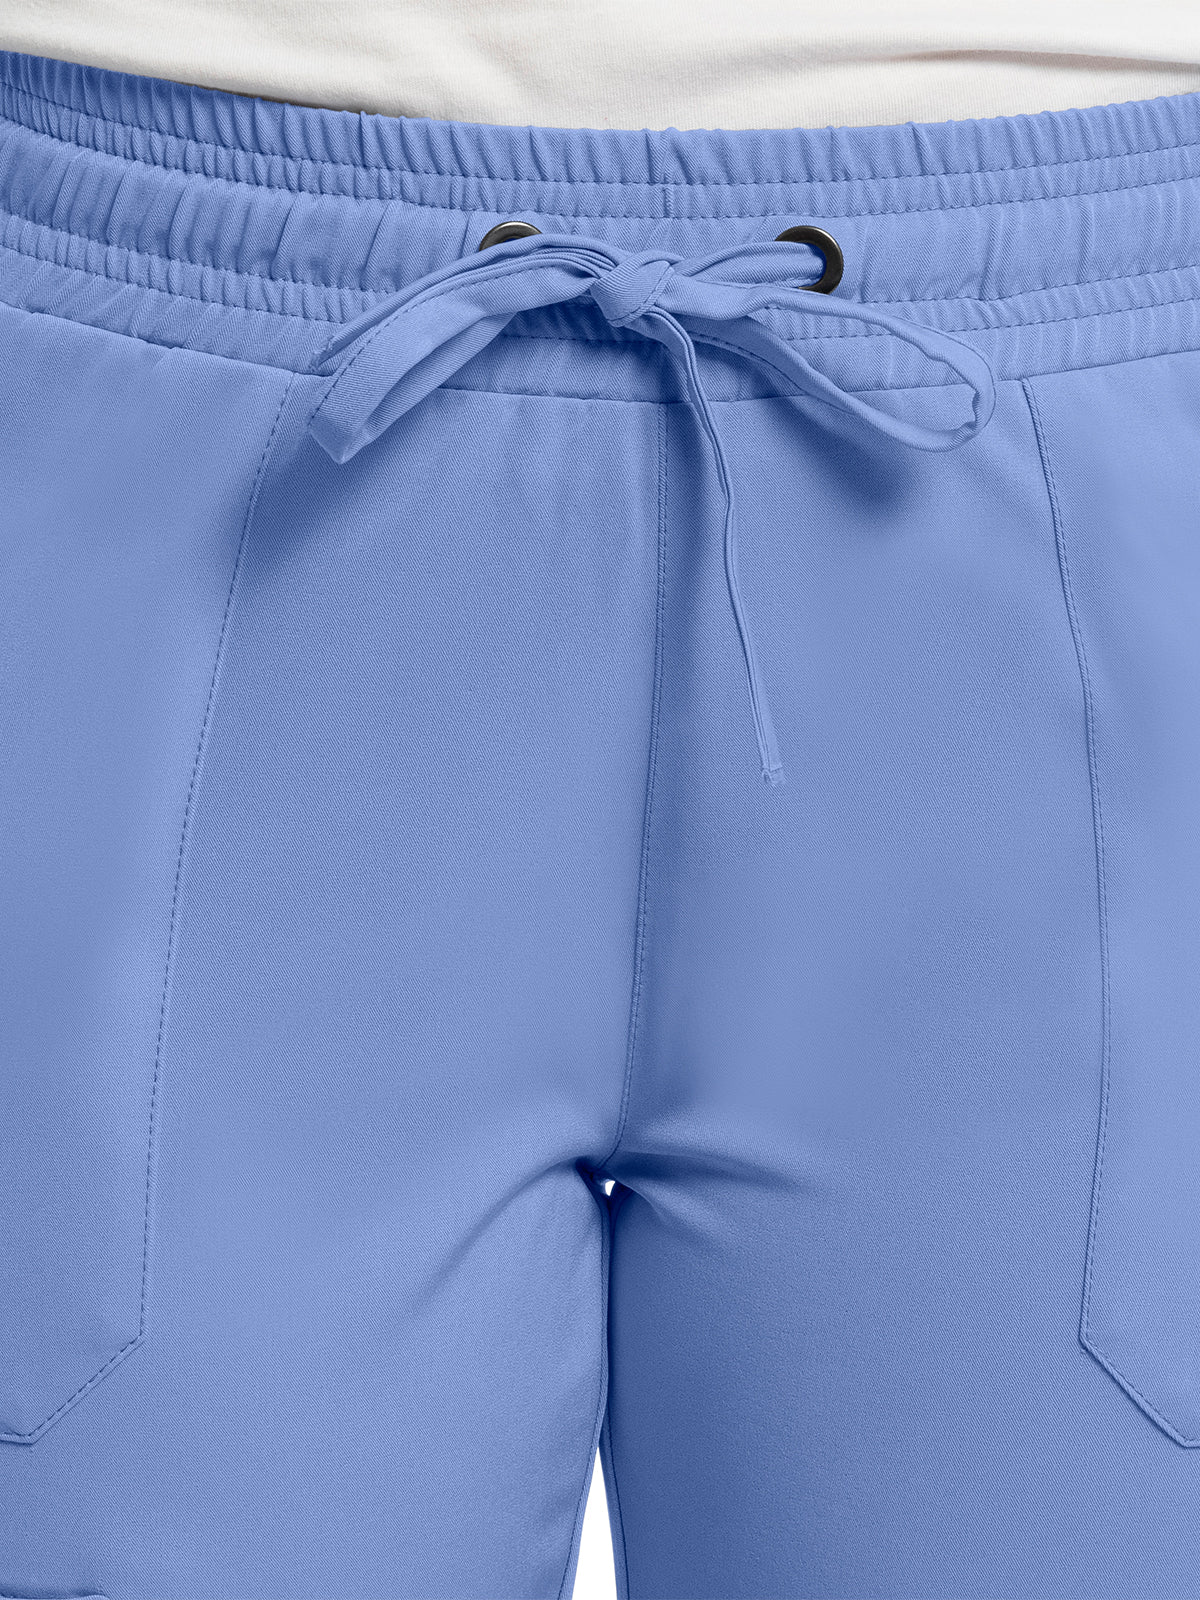 Women's Four-Way Stretch Fabric Pant - 9575 - Ceil